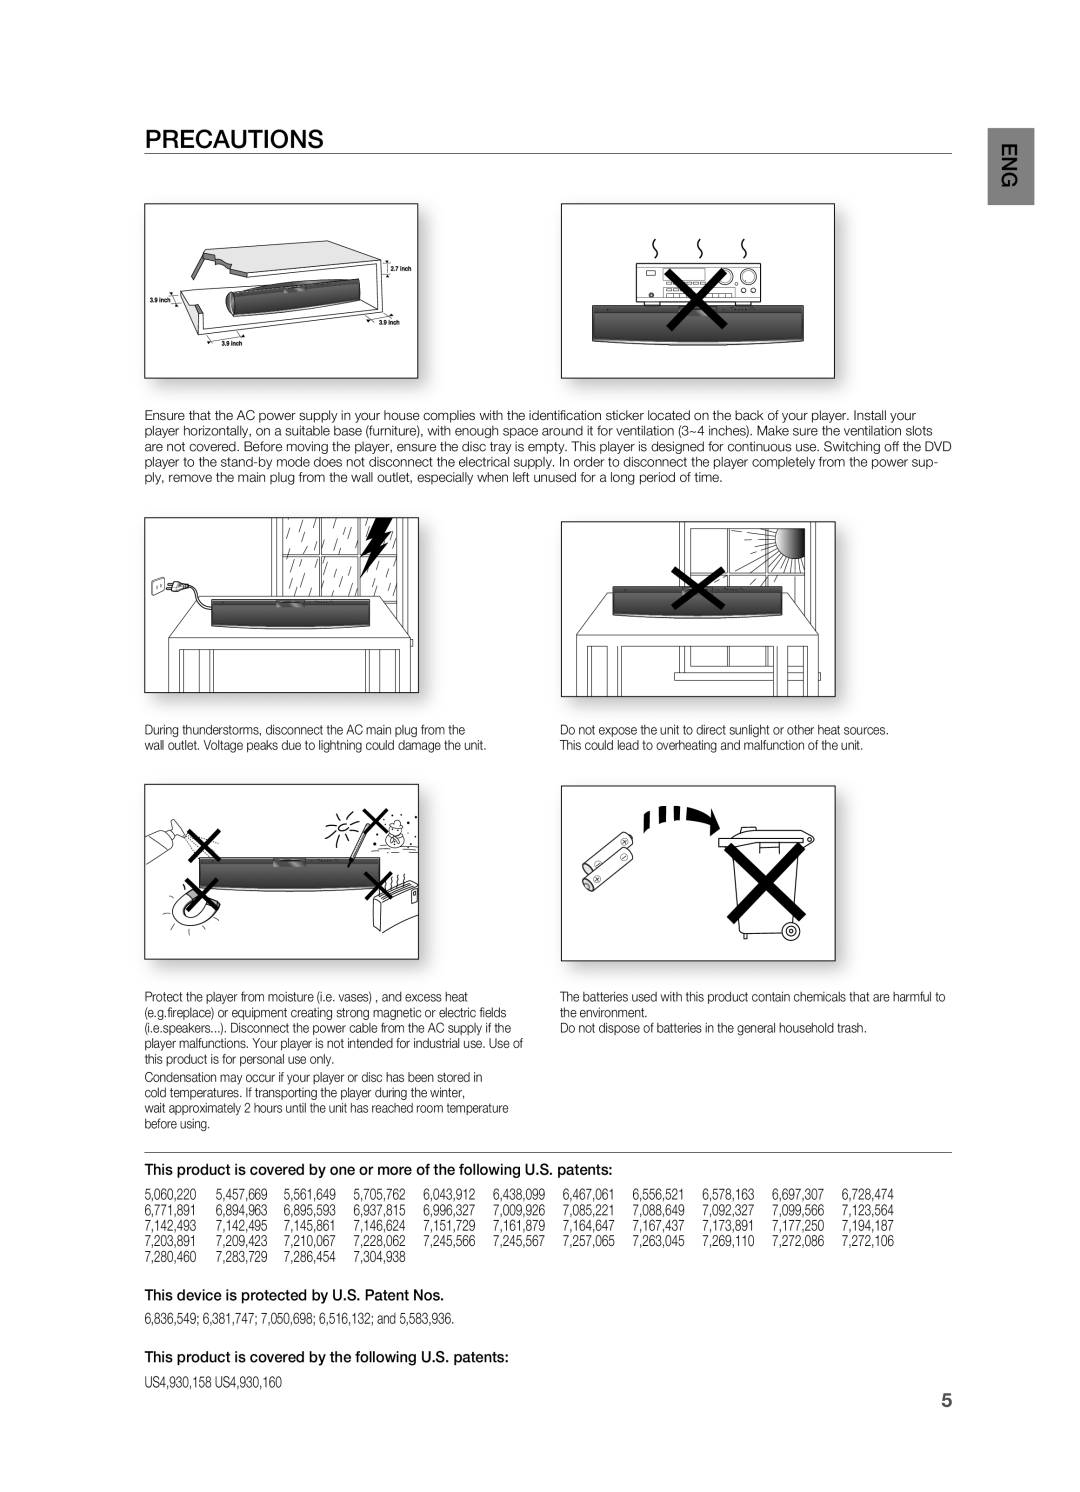 Sony HT-X810 user manual PrECAUTIONS 